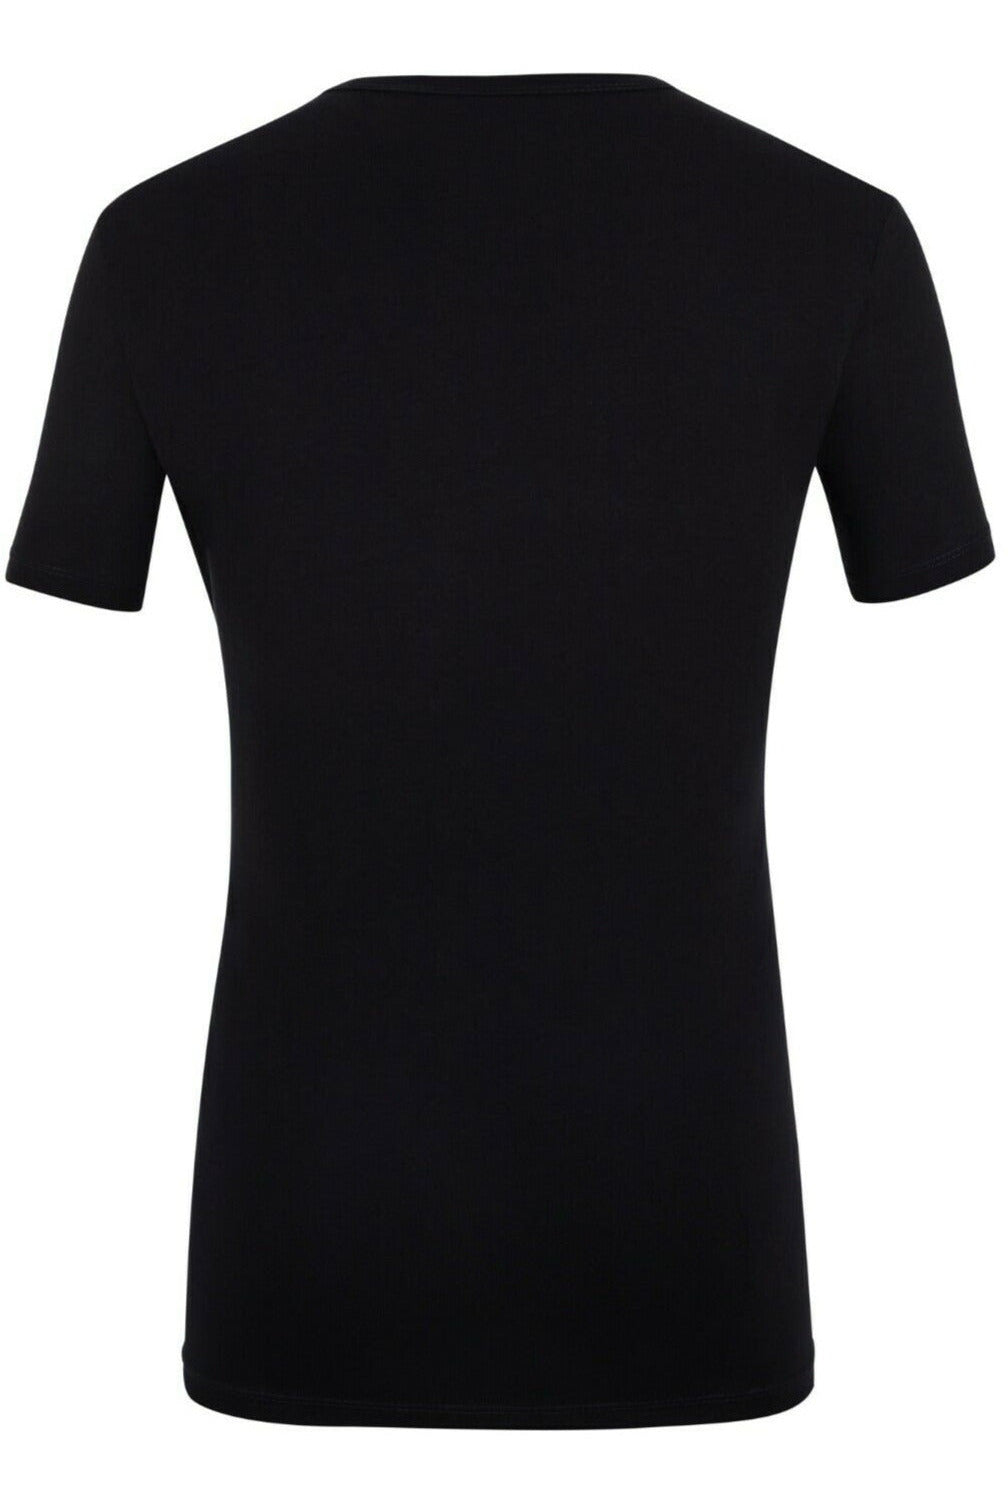 Armani Exchange T-Shirt In Black